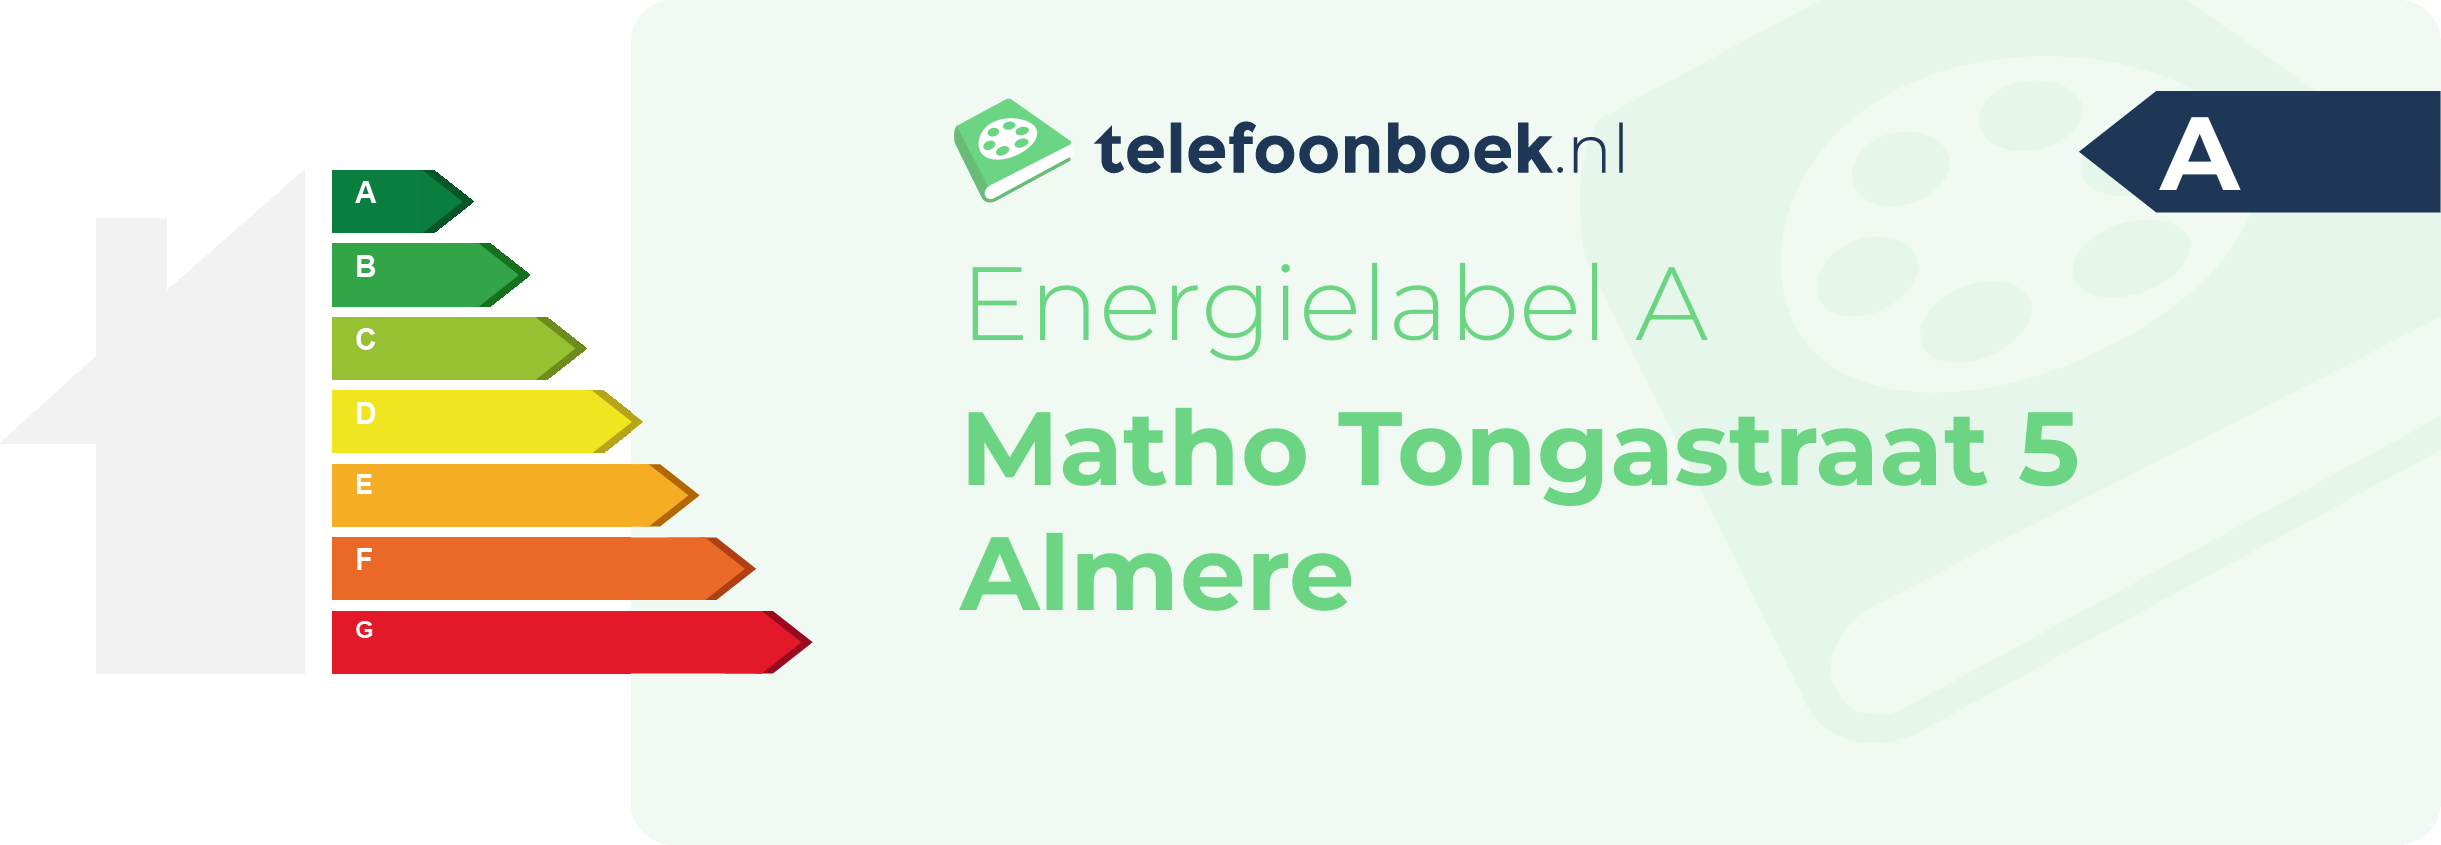 Energielabel Matho Tongastraat 5 Almere